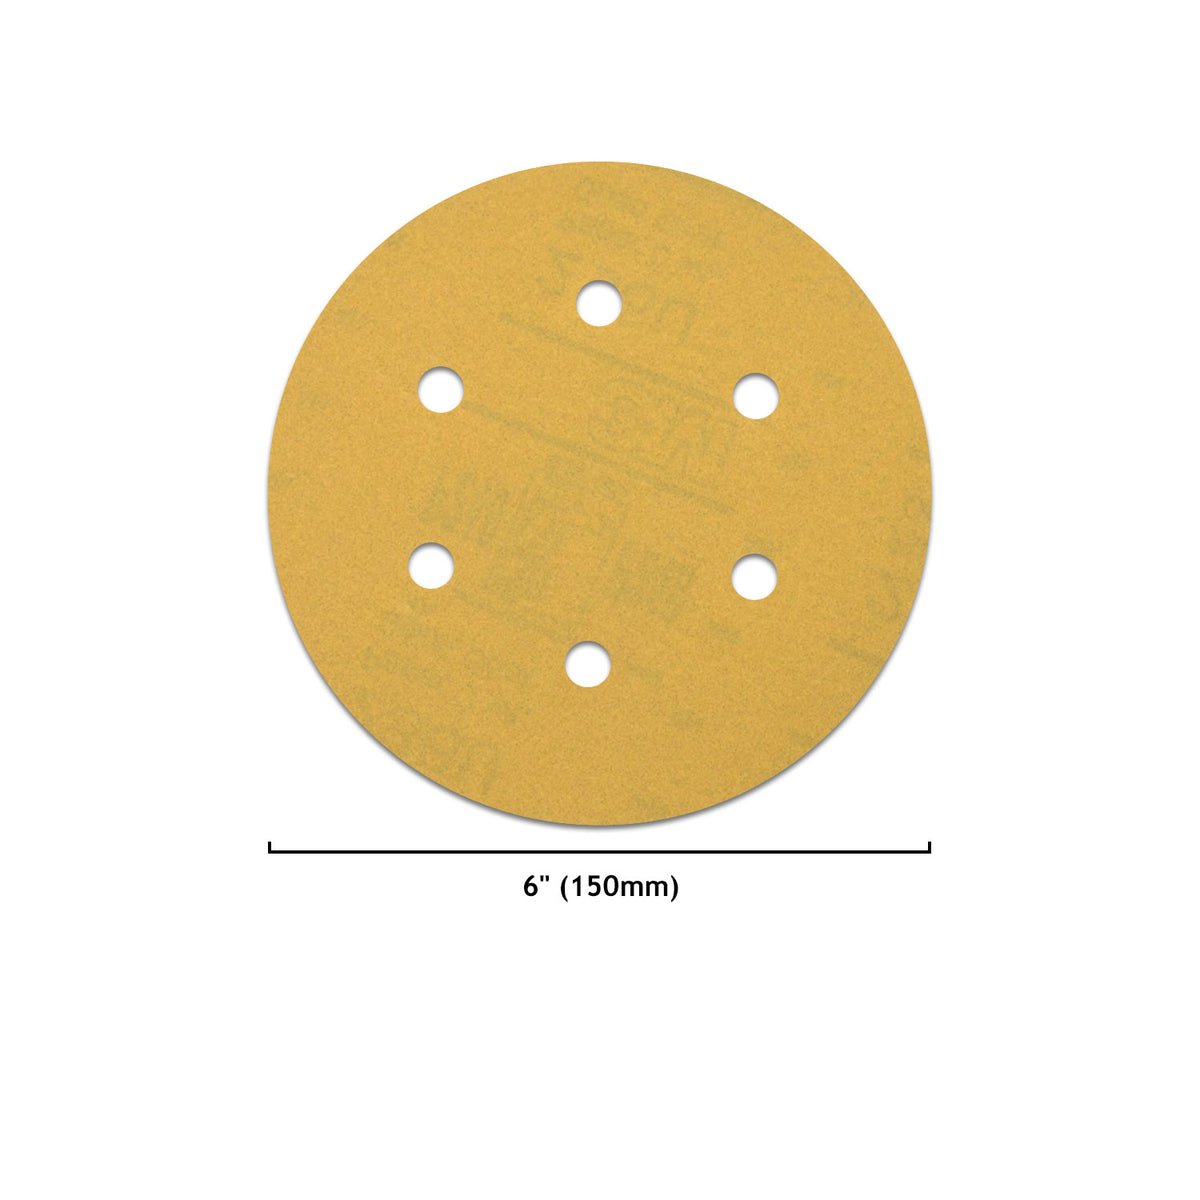 6" (150mm) 6-Hole Yellow Hook&Loop Sanding Discs for Dry Sanding(80-400 Grit), 1 Disc